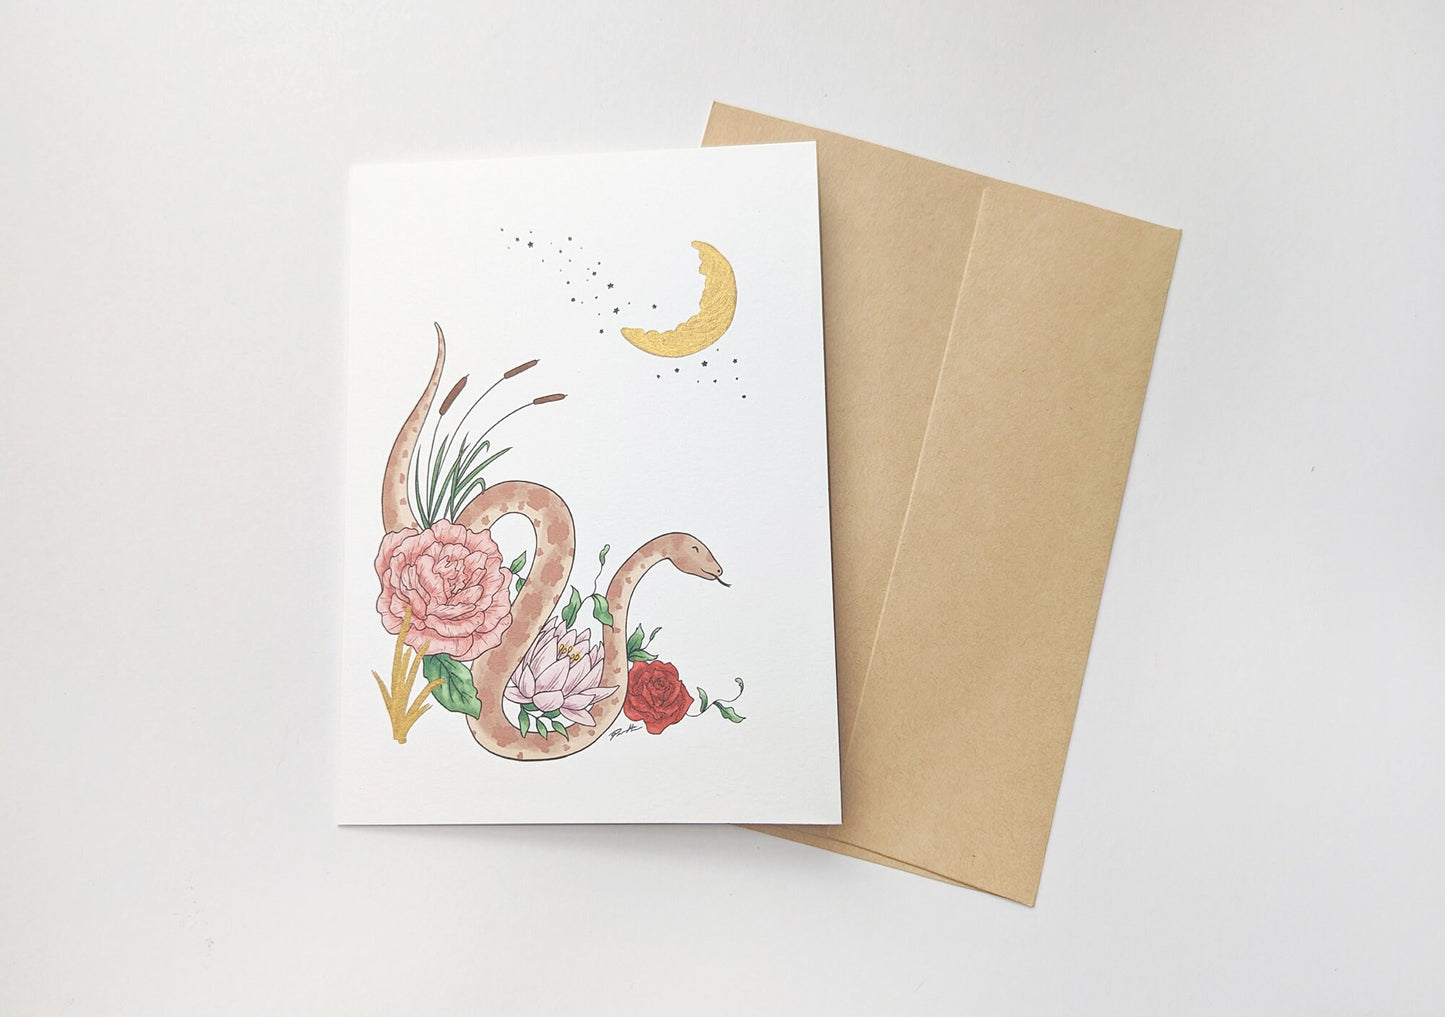 Snake Greeting Card - Lunar Zodiac Series